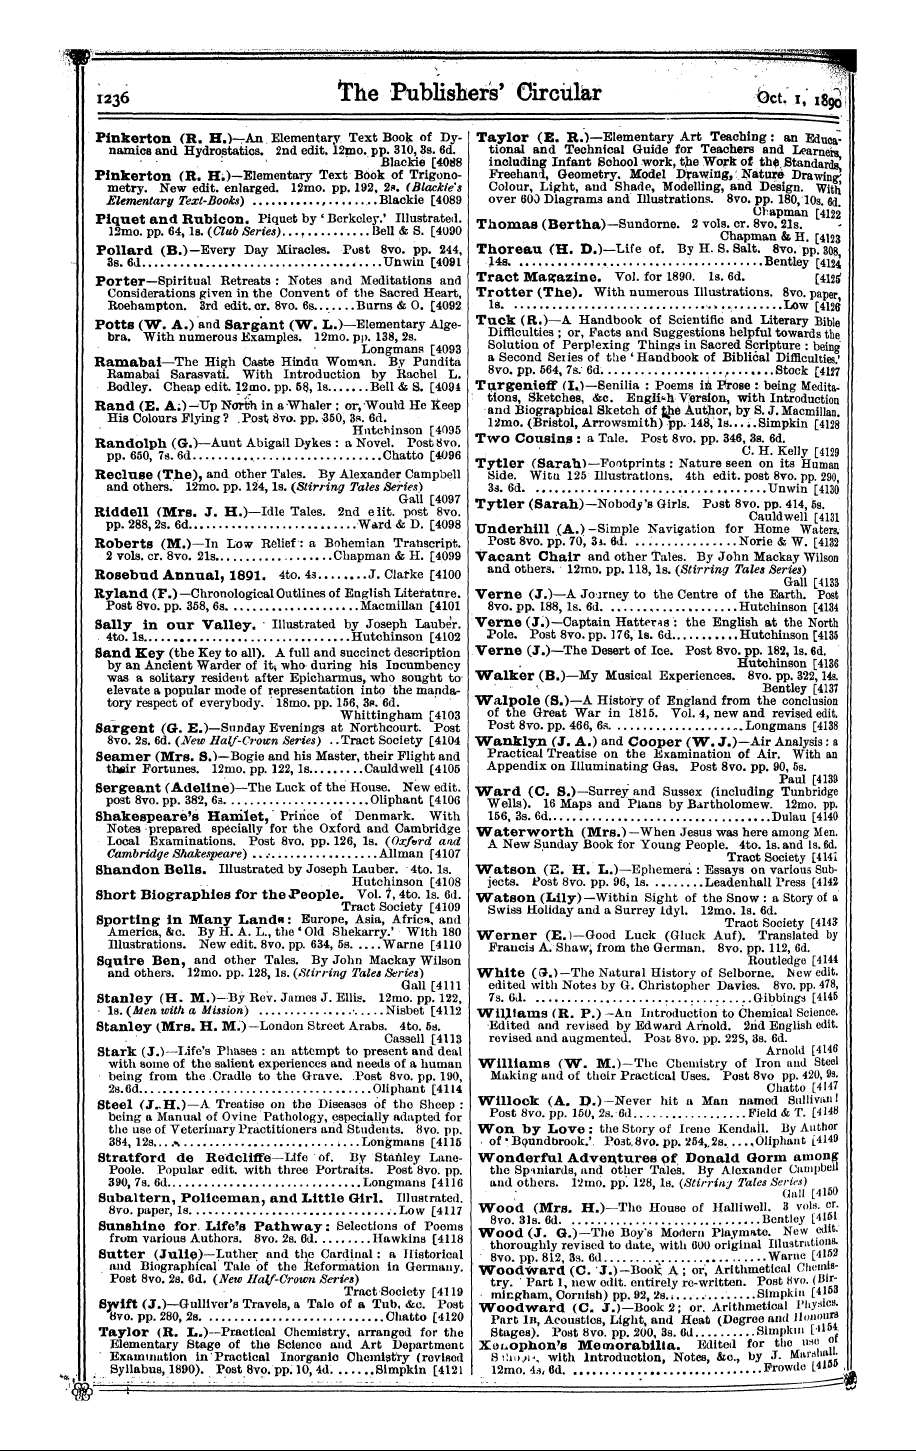 Publishers’ Circular (1880-1890): jS F Y, 1st edition: 78